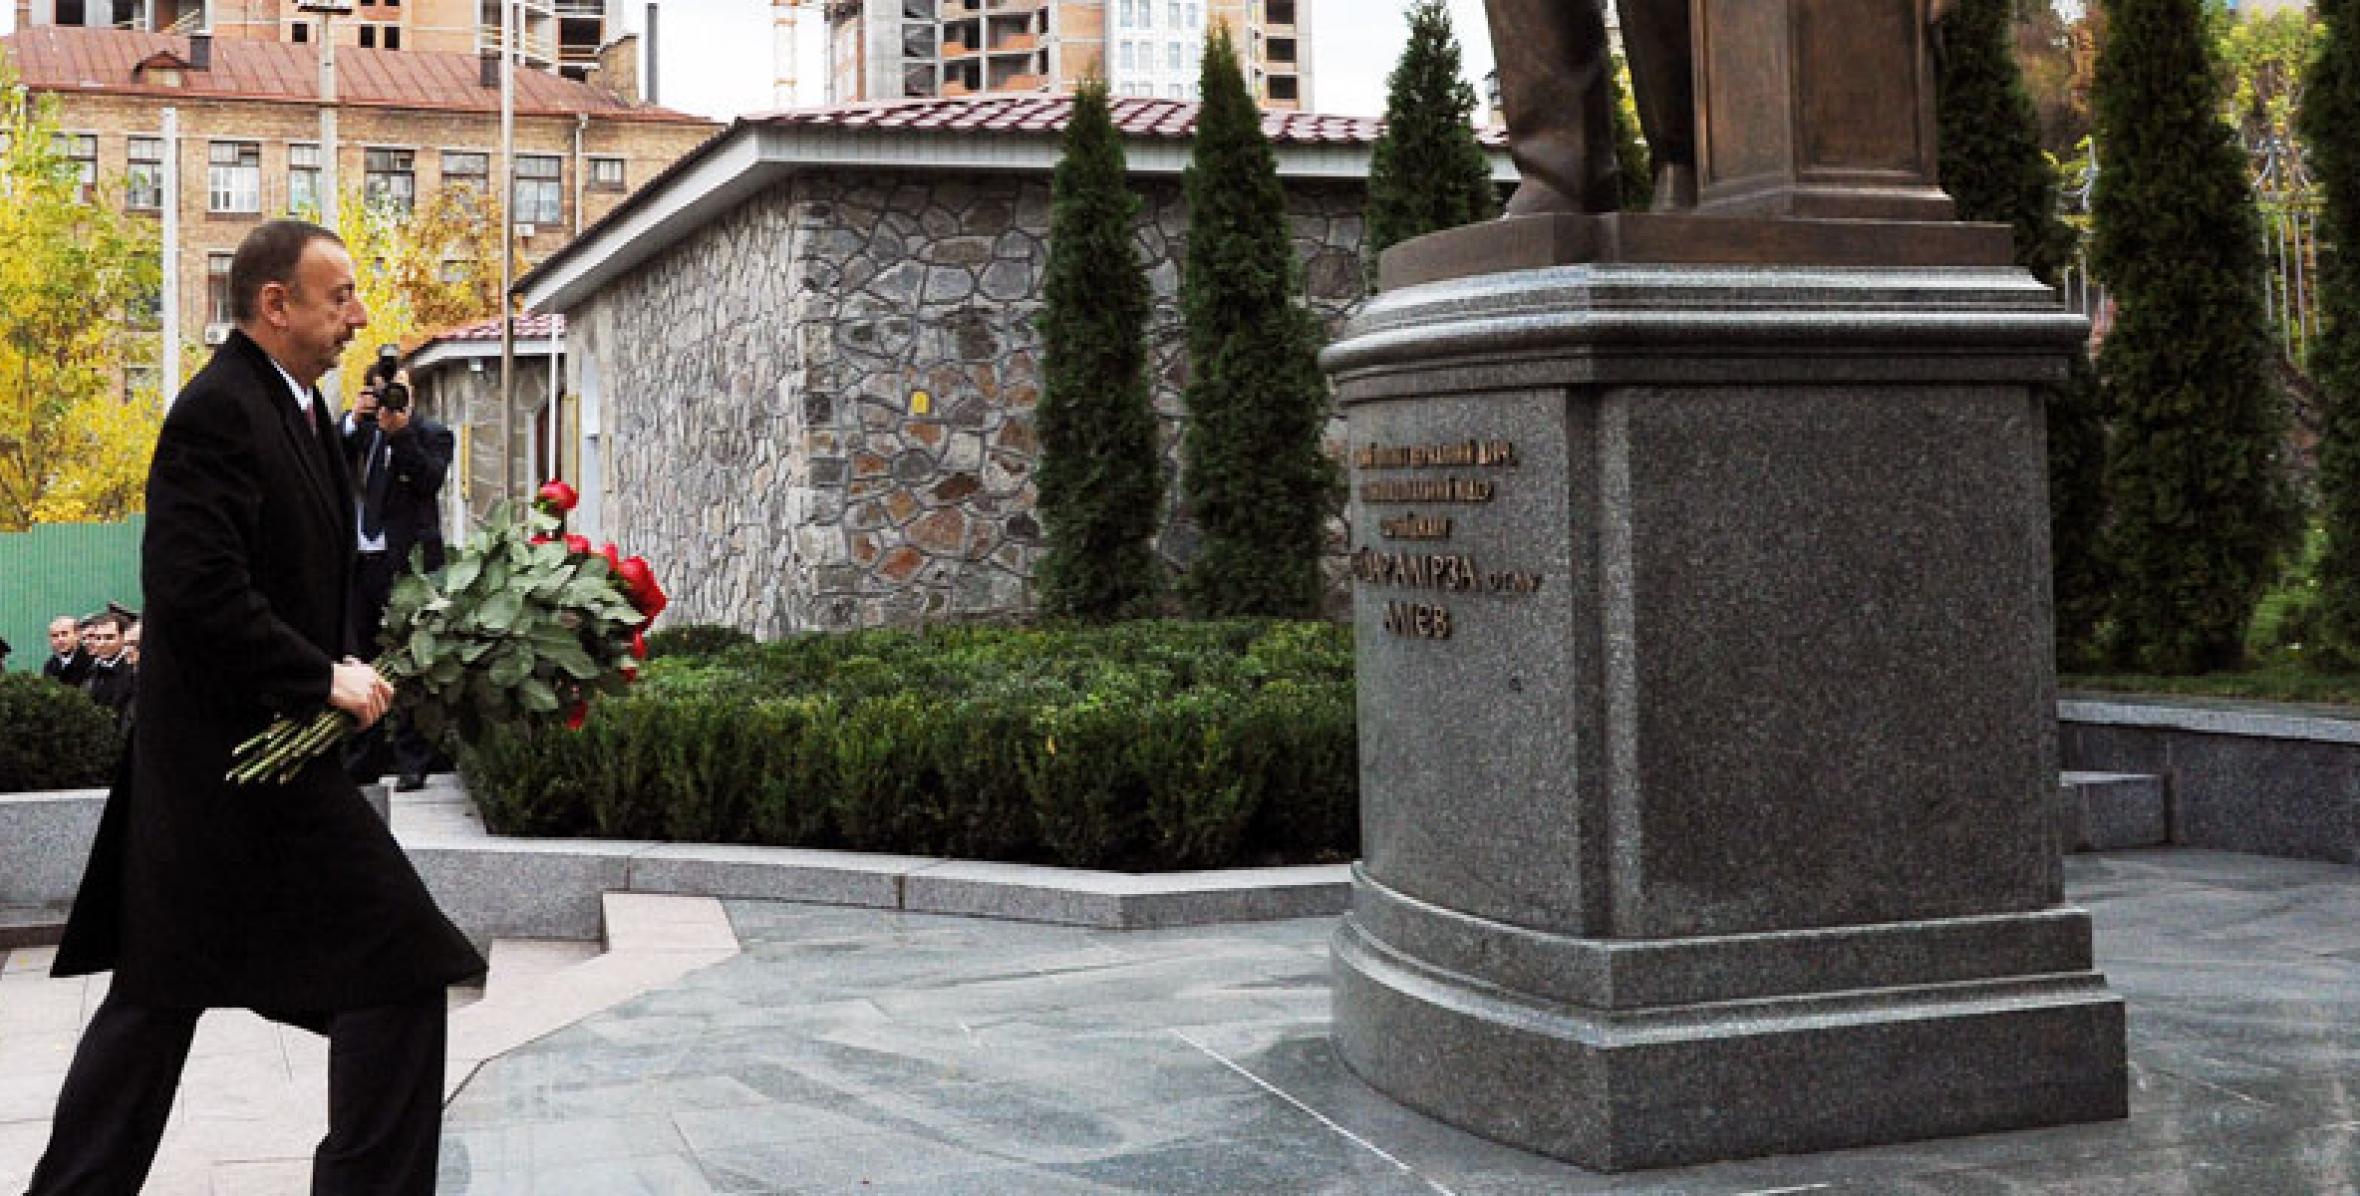 Ilham Aliyev visited the monument of national leader Heydar Aliyev erected in the center of Kiev